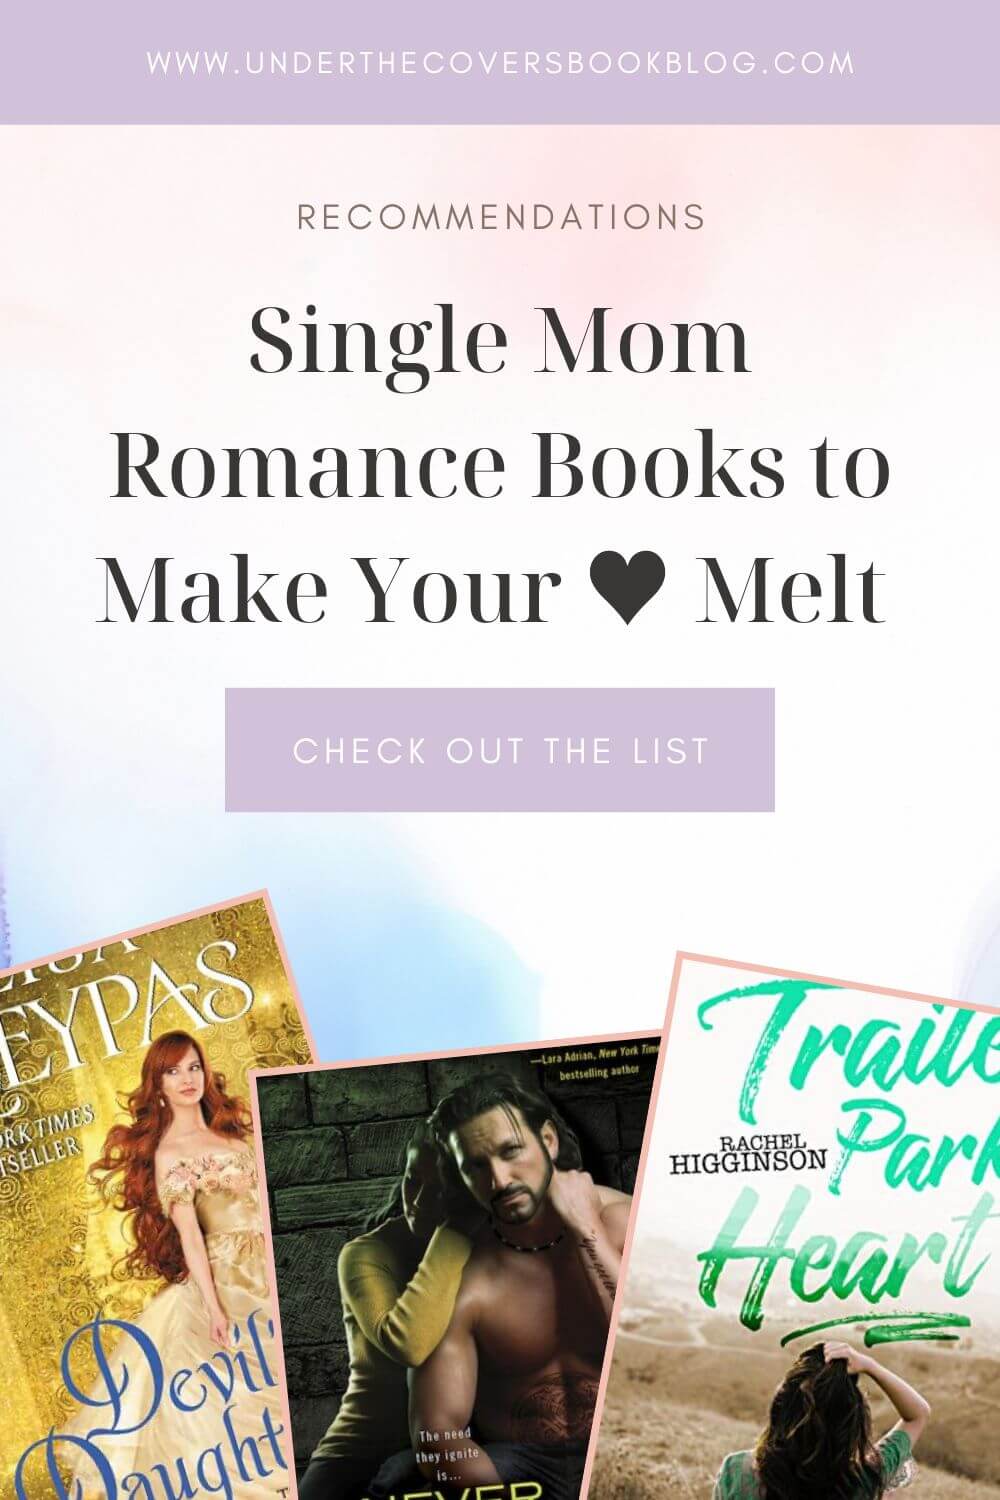 Single Mom Romance Books to Make Your Heart Melt